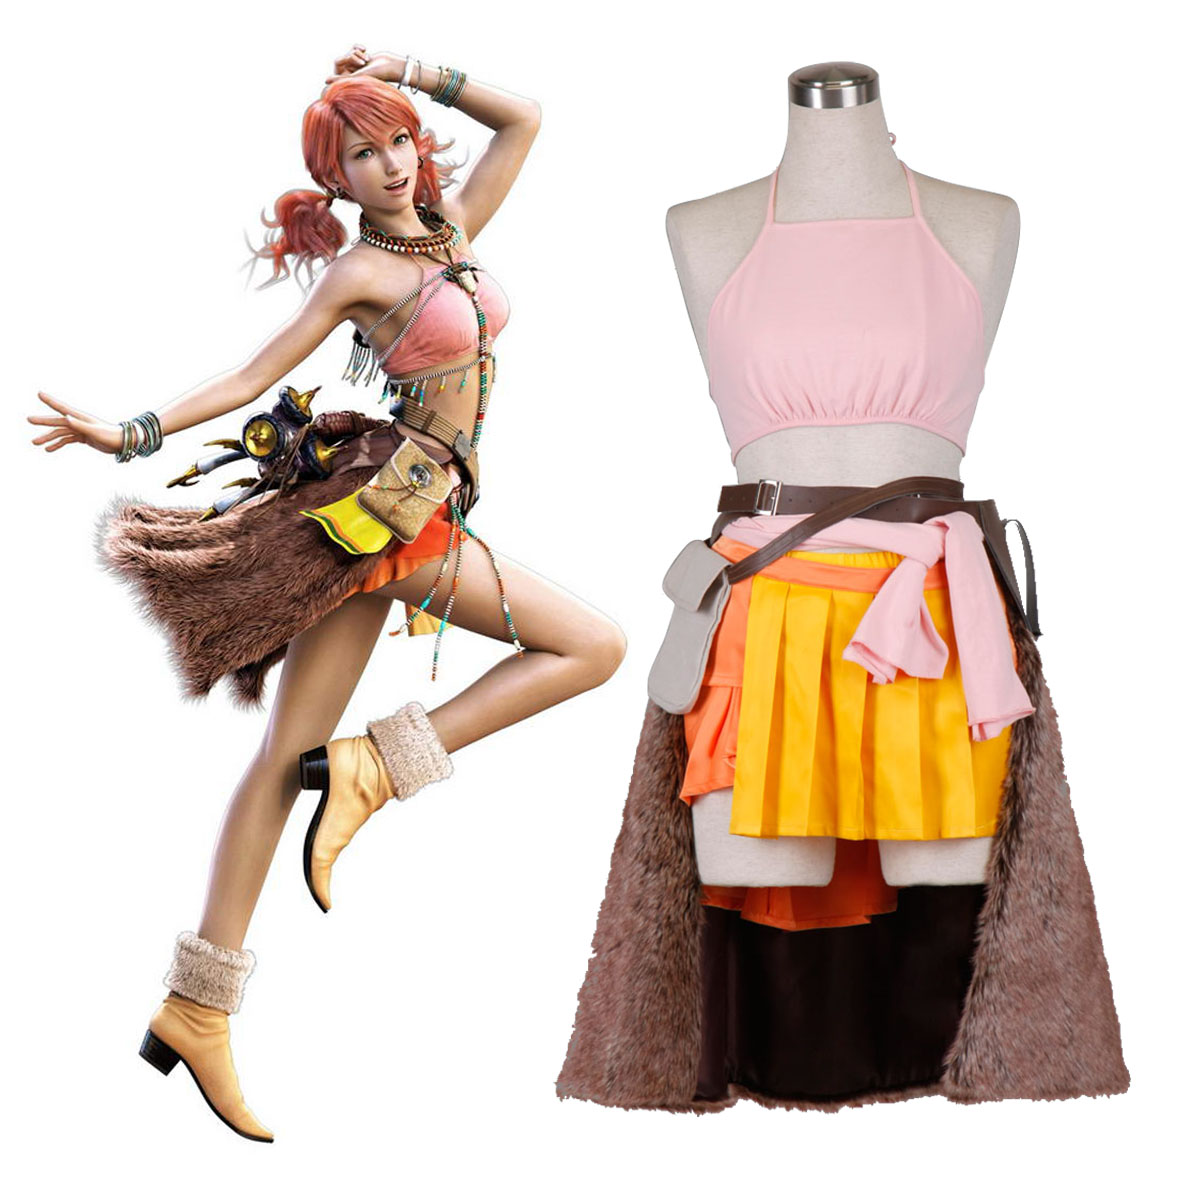 Final Fantasy Xiii Oerba Dia Vanille 1 Anime Cosplay Costumes Outfit Final Fantasy Xiii Oerba Dia Vanille 1 Anime Cosplay Costumes Outfit